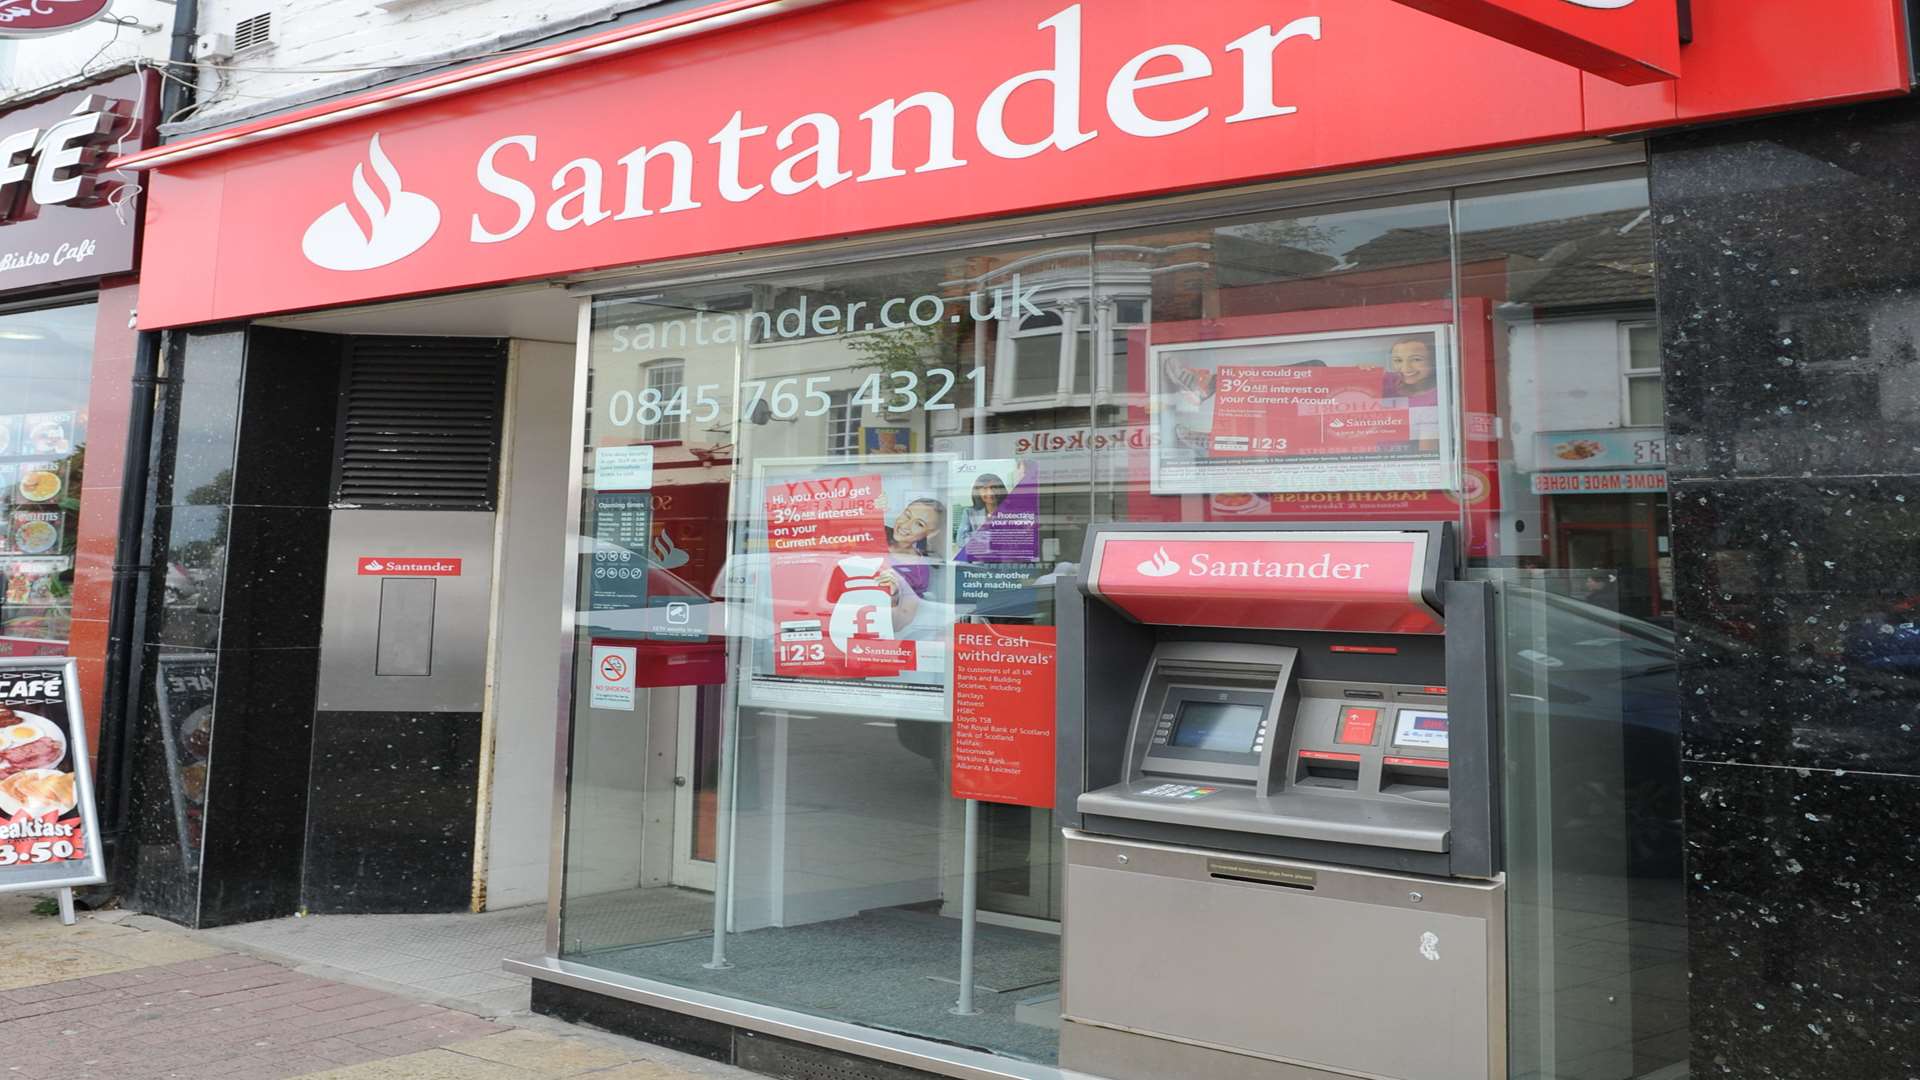 Santander in Gillingham High Street was raided